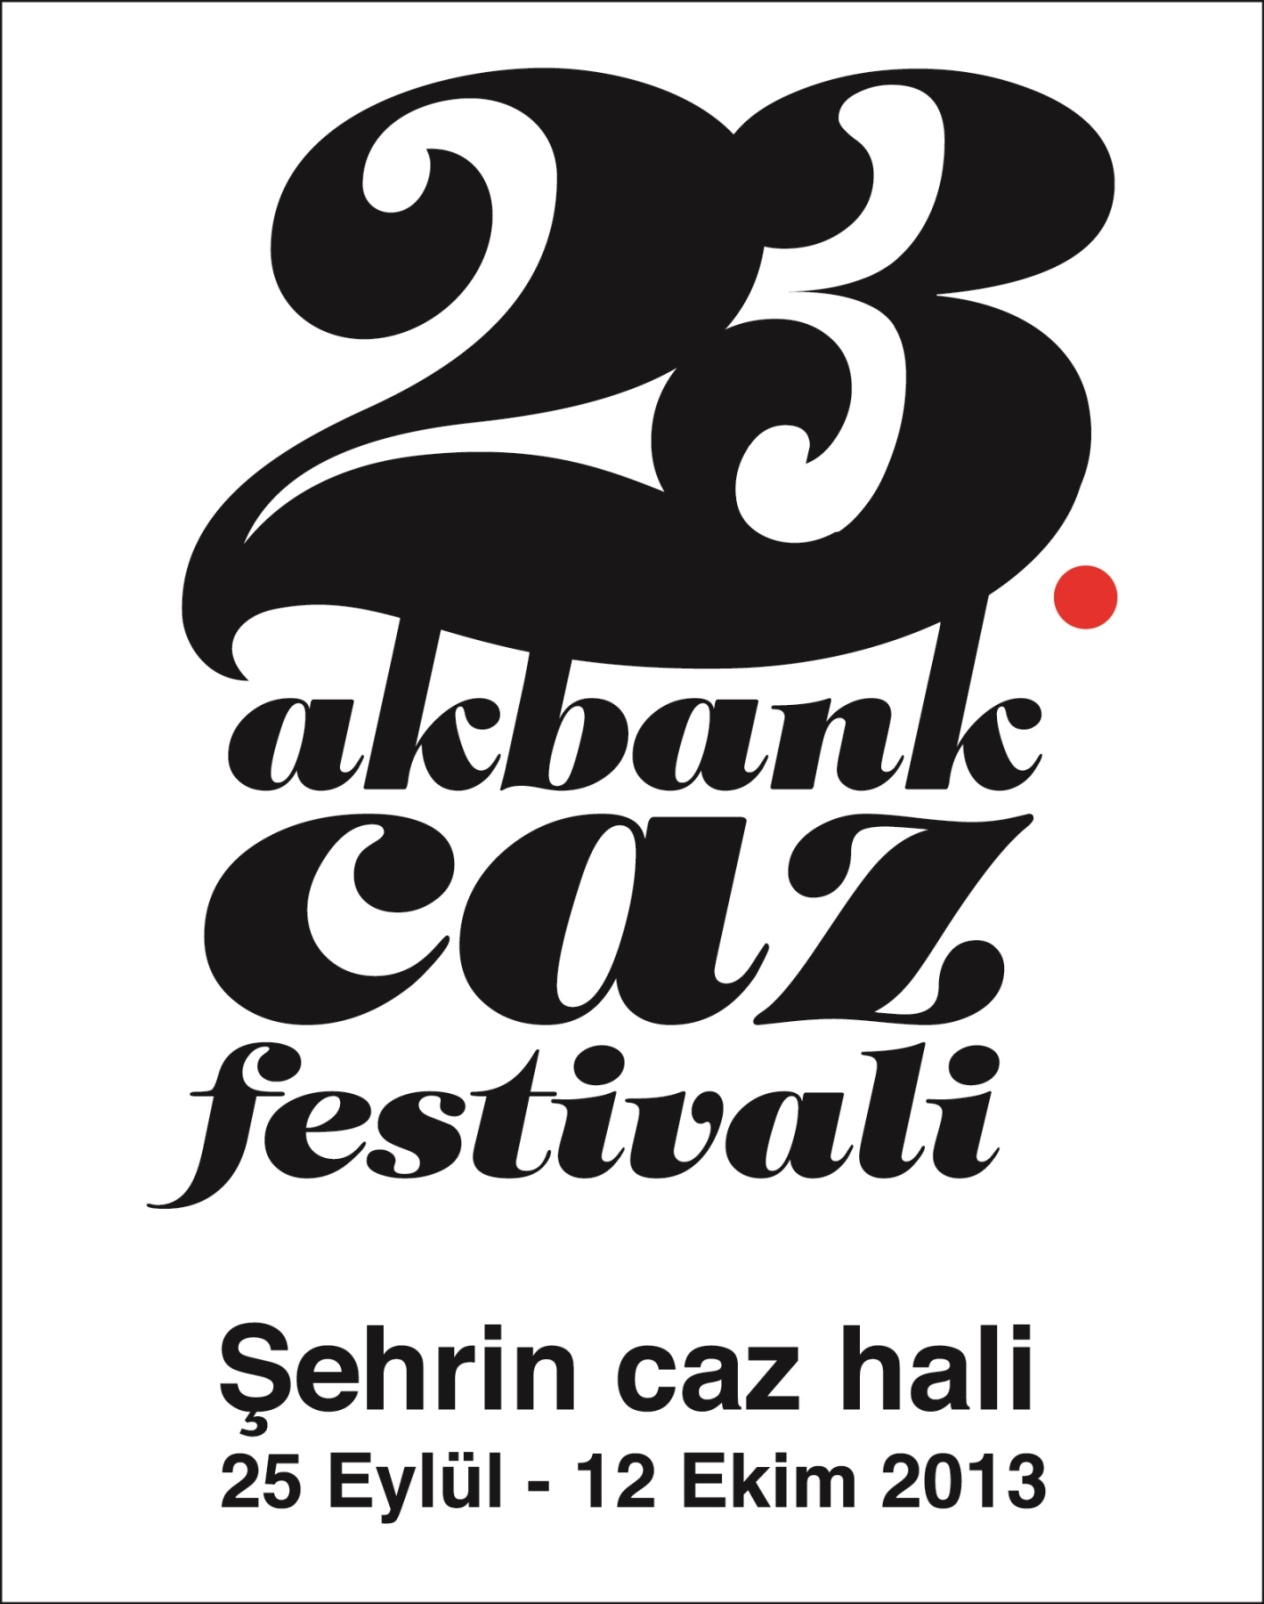  23.-Akbank-Caz-Festivali-logo